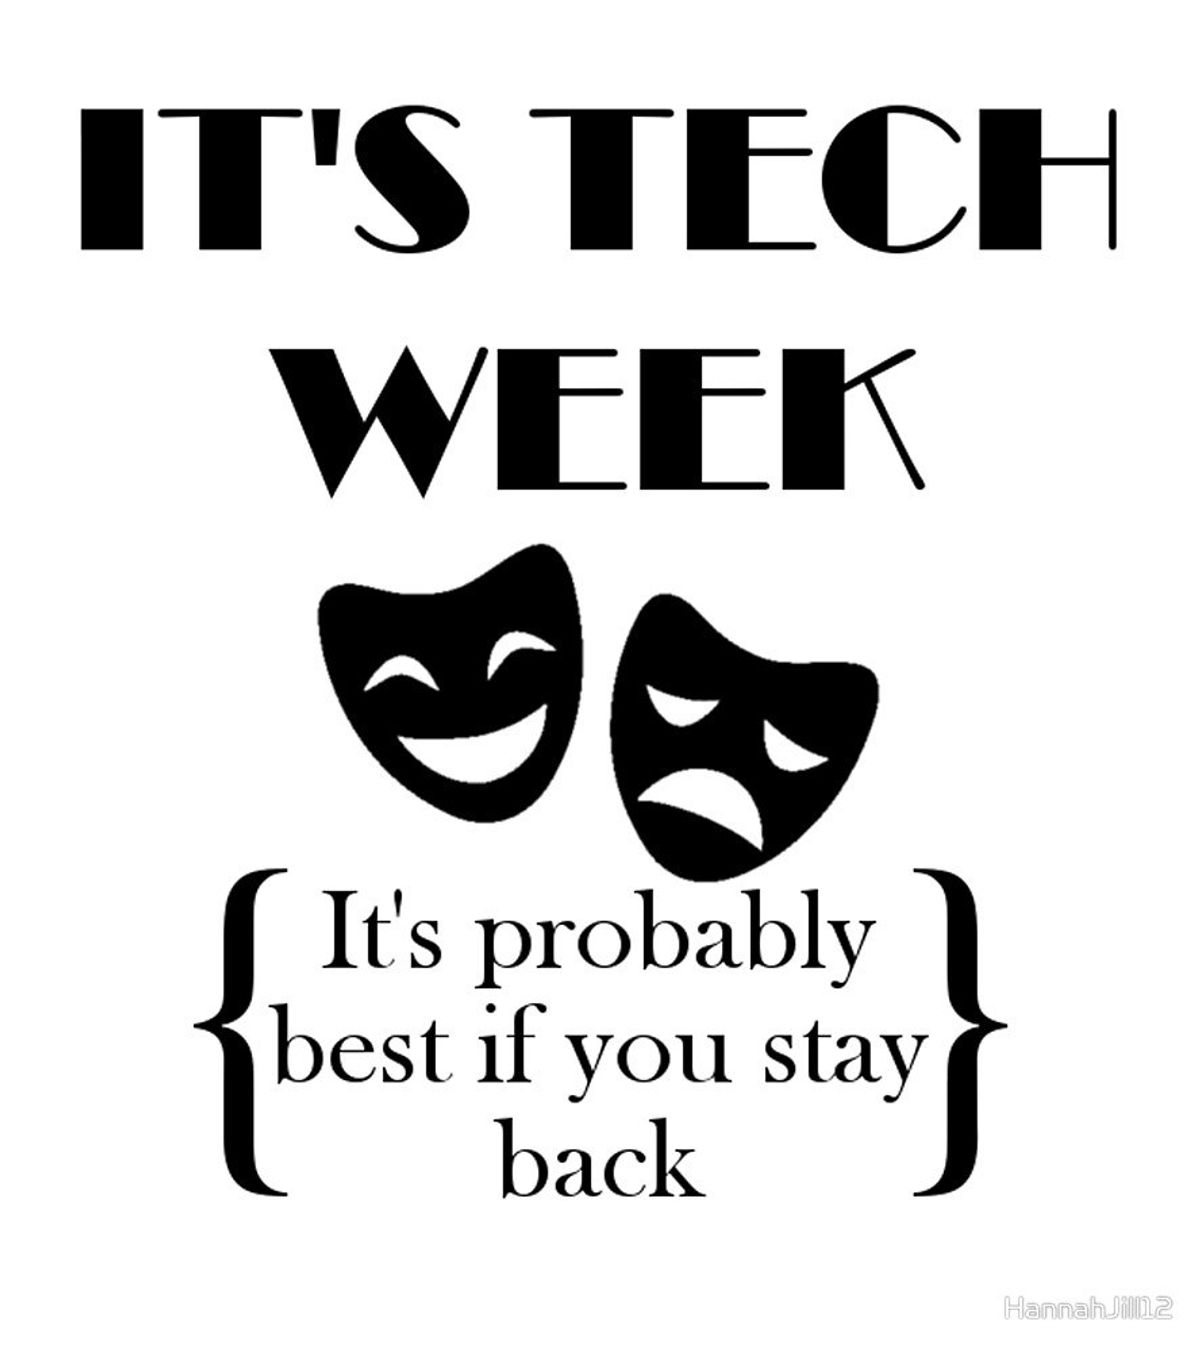 6 Symptoms of Tech Week